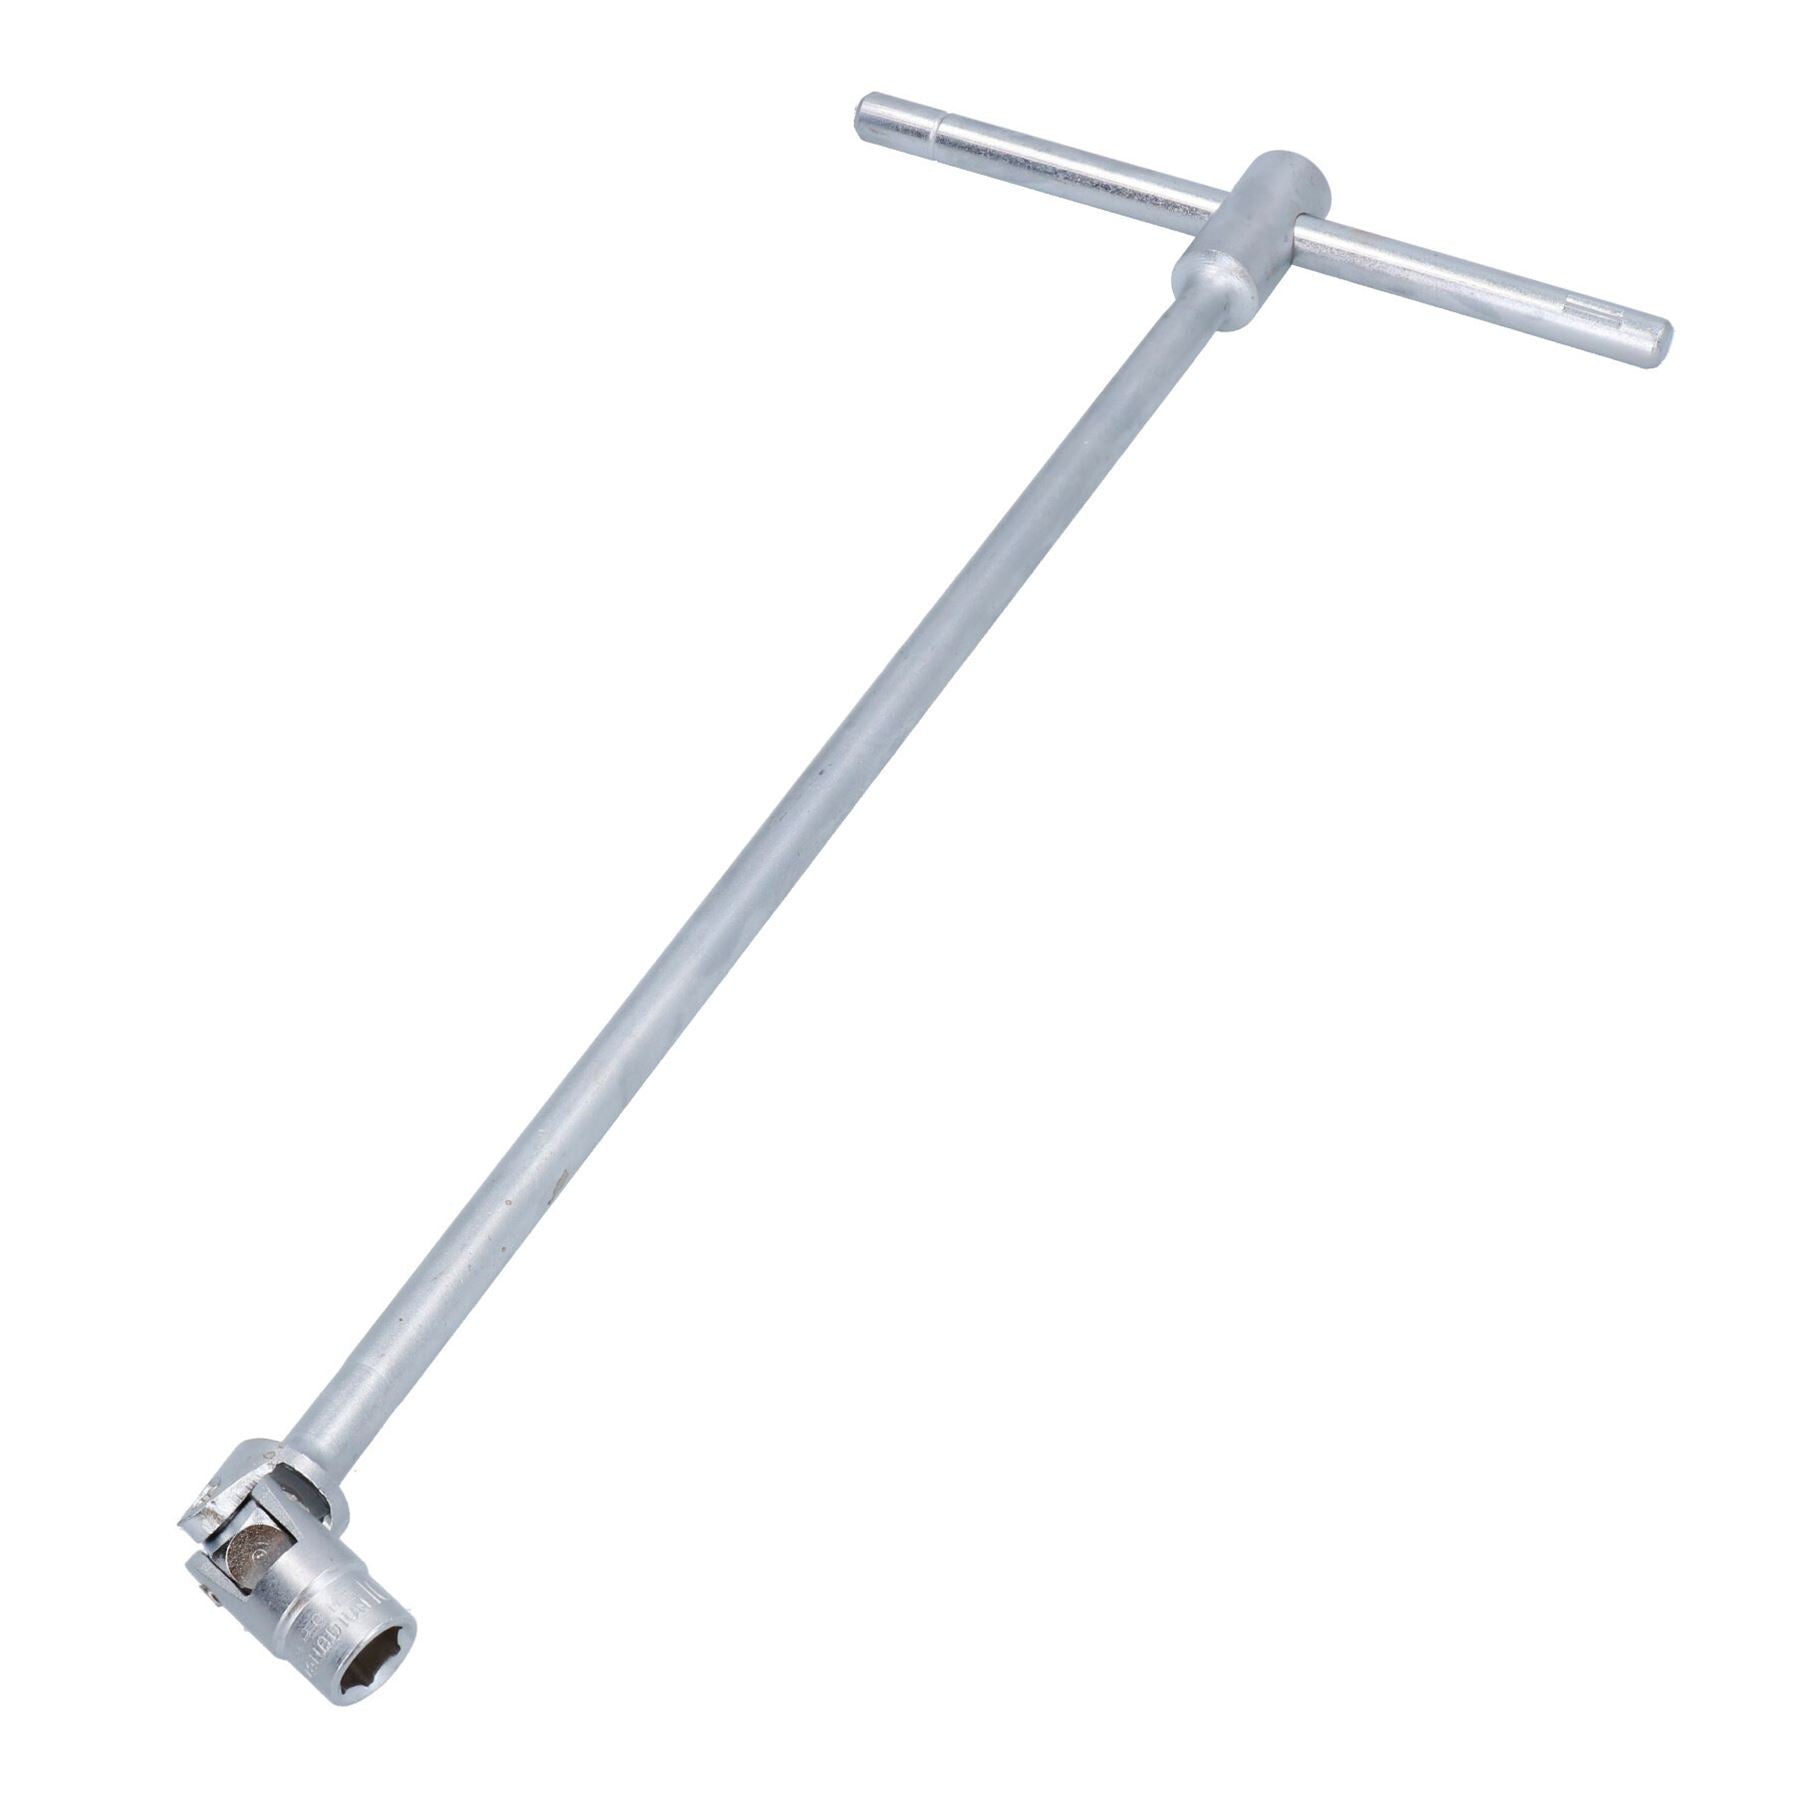 10mm Metric UJ Universal Joint T Bar Sockets Spanner Nut Spinner Wrench